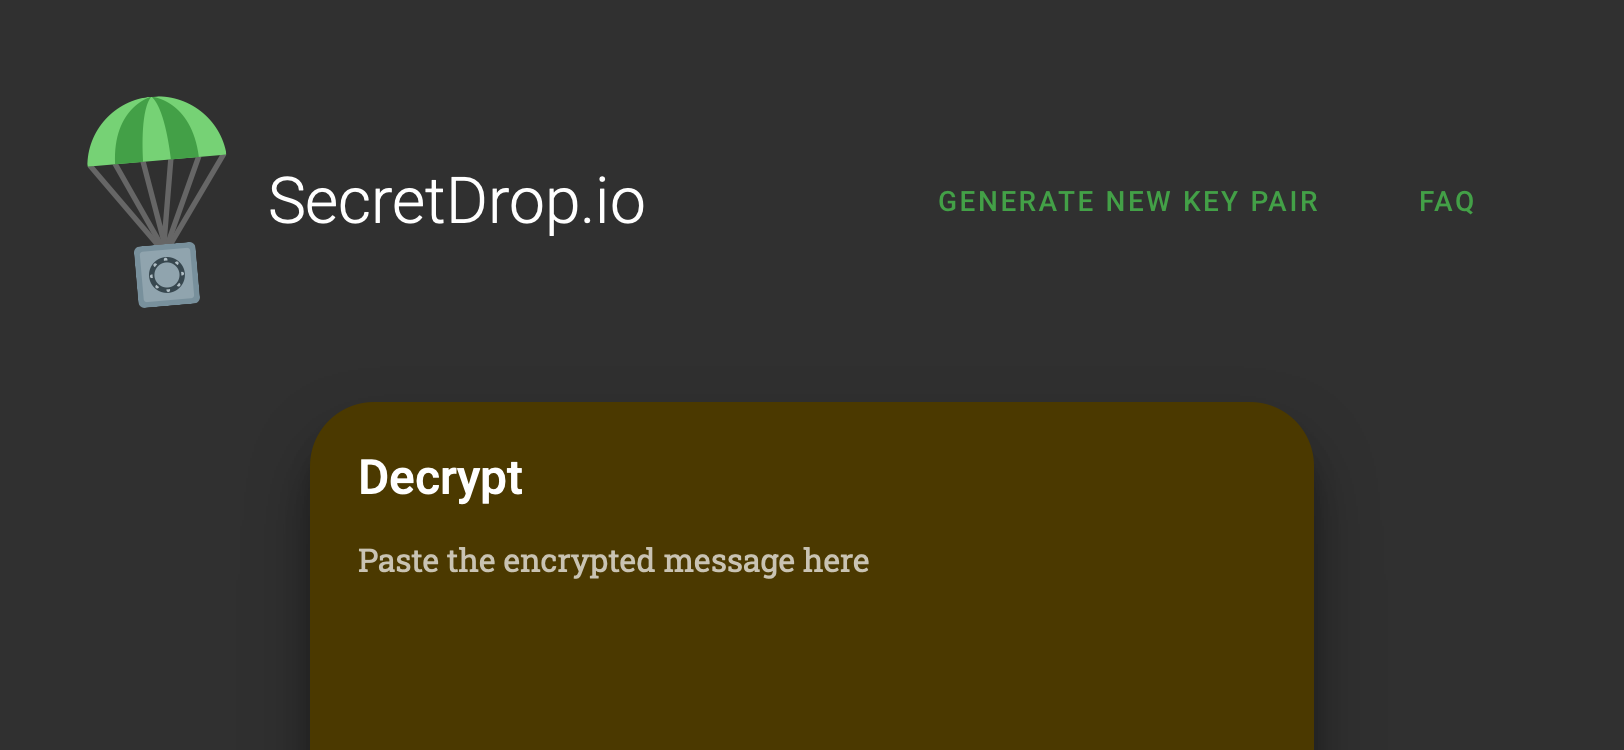 main-test-ts-encrypt-decrypt-decrypt-page-file-decryption-screenshot-812-375-0-snap.png